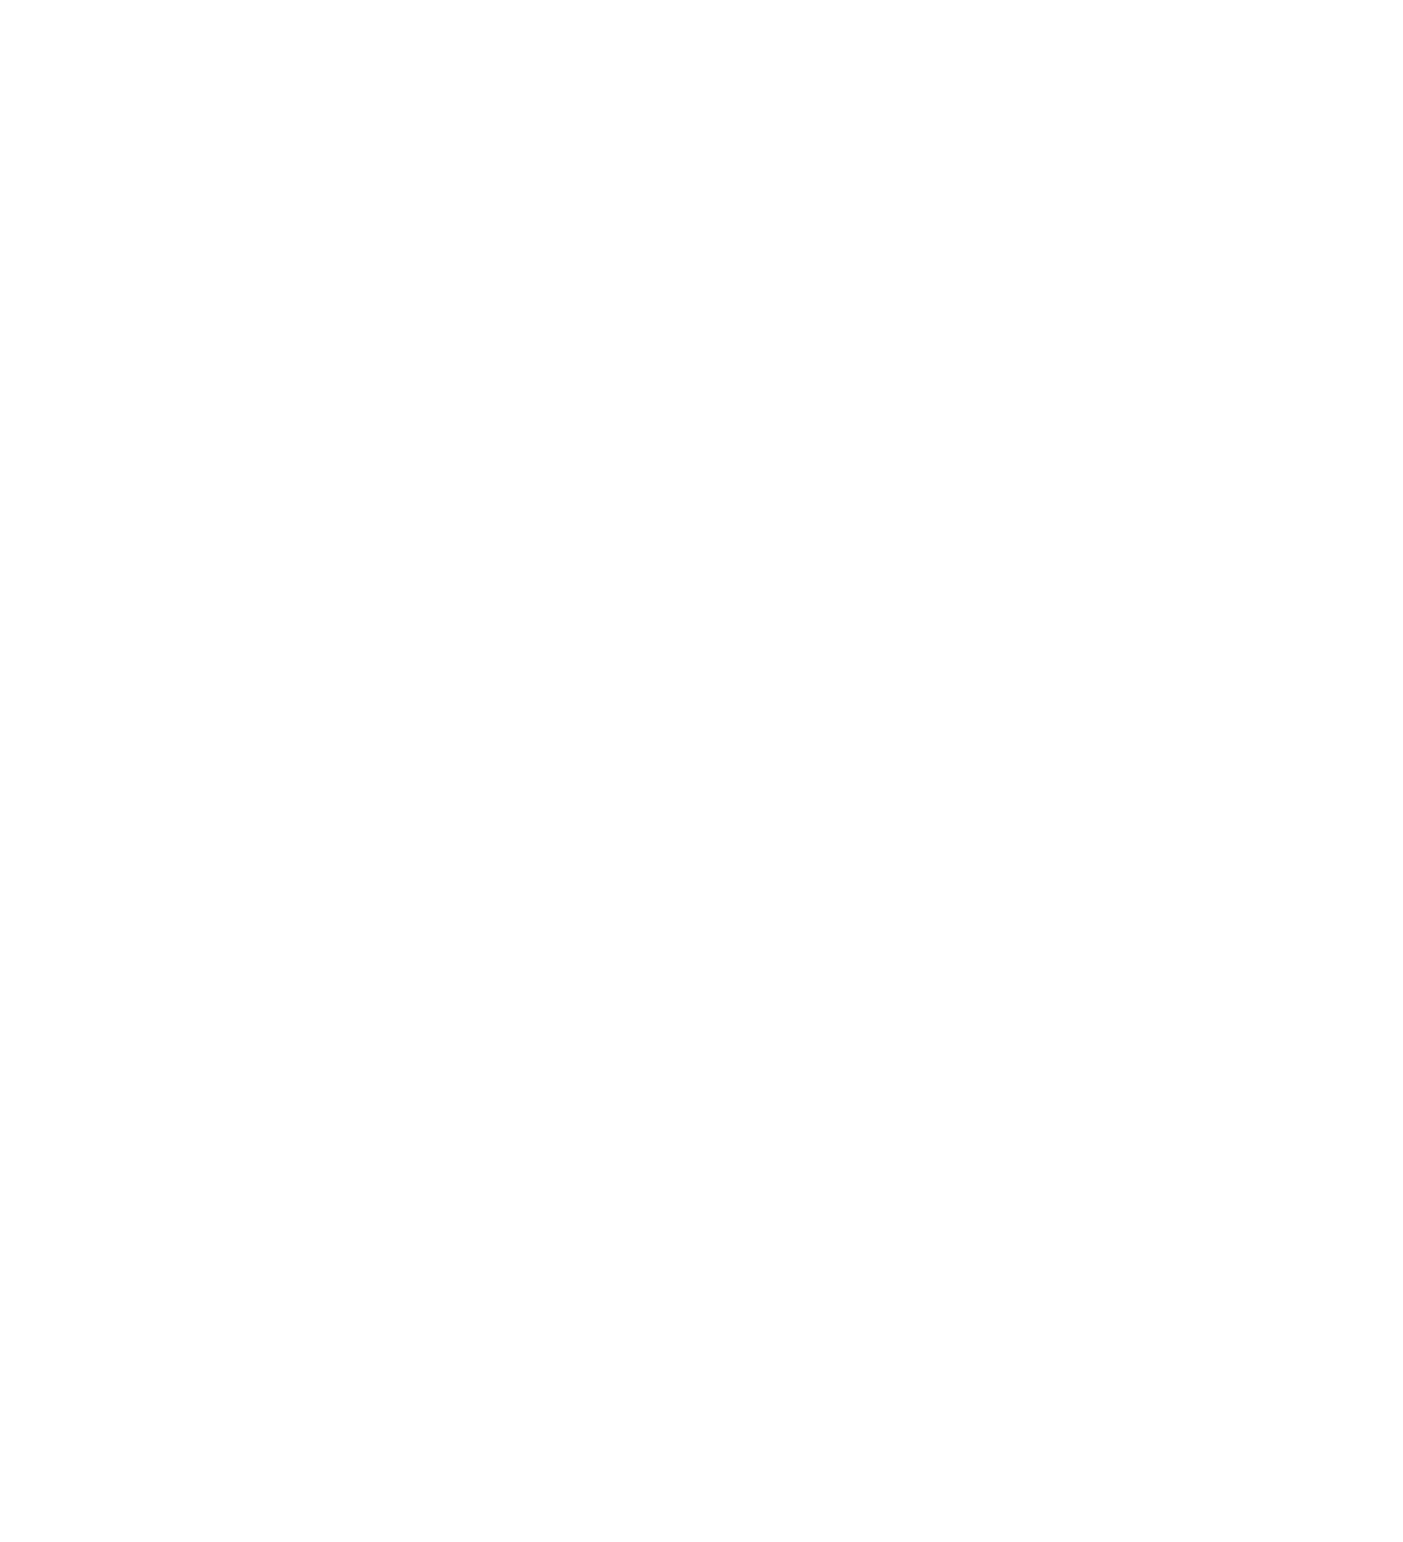 National Bank of Bahrain logo pour fonds sombres (PNG transparent)